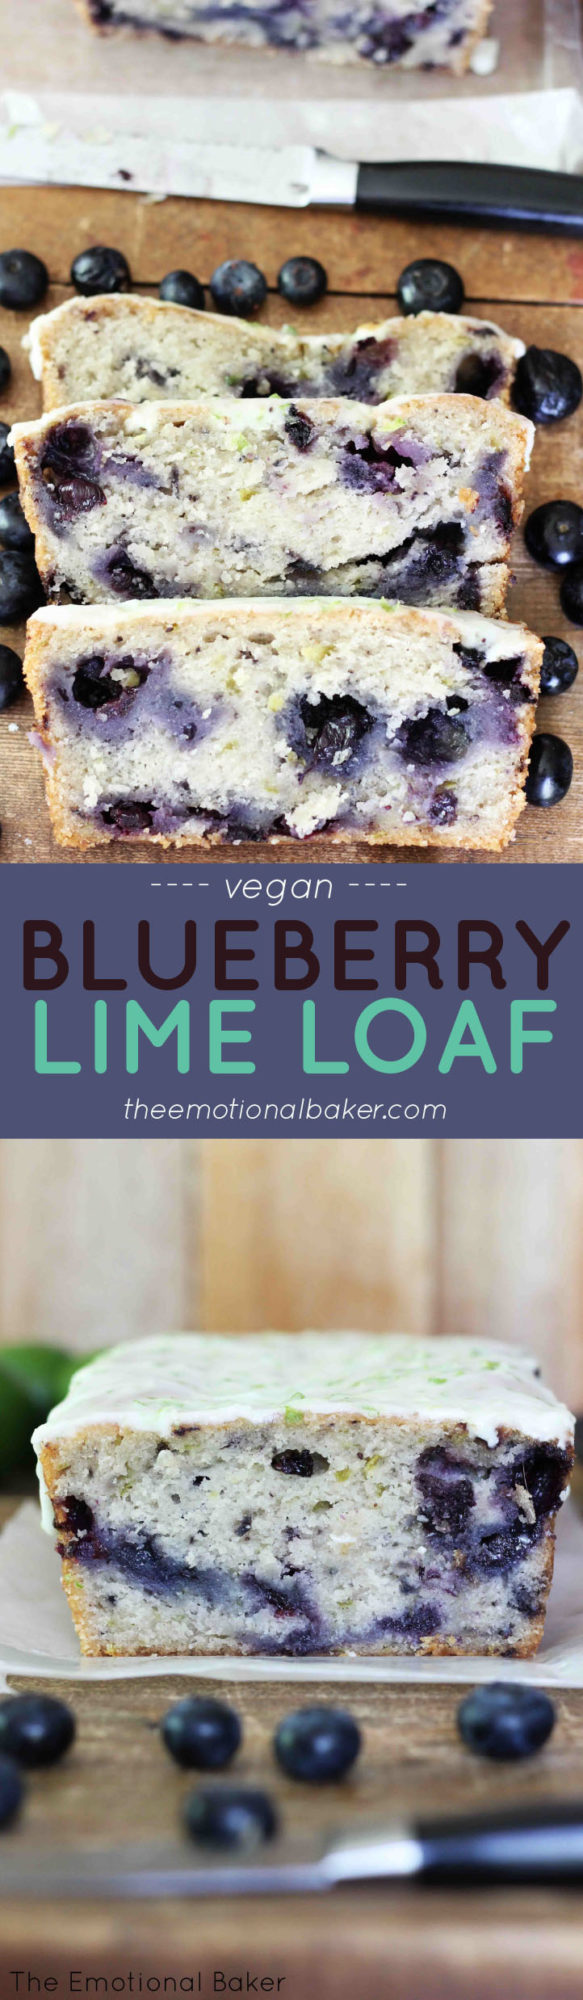 Blueberry Lime Loaf